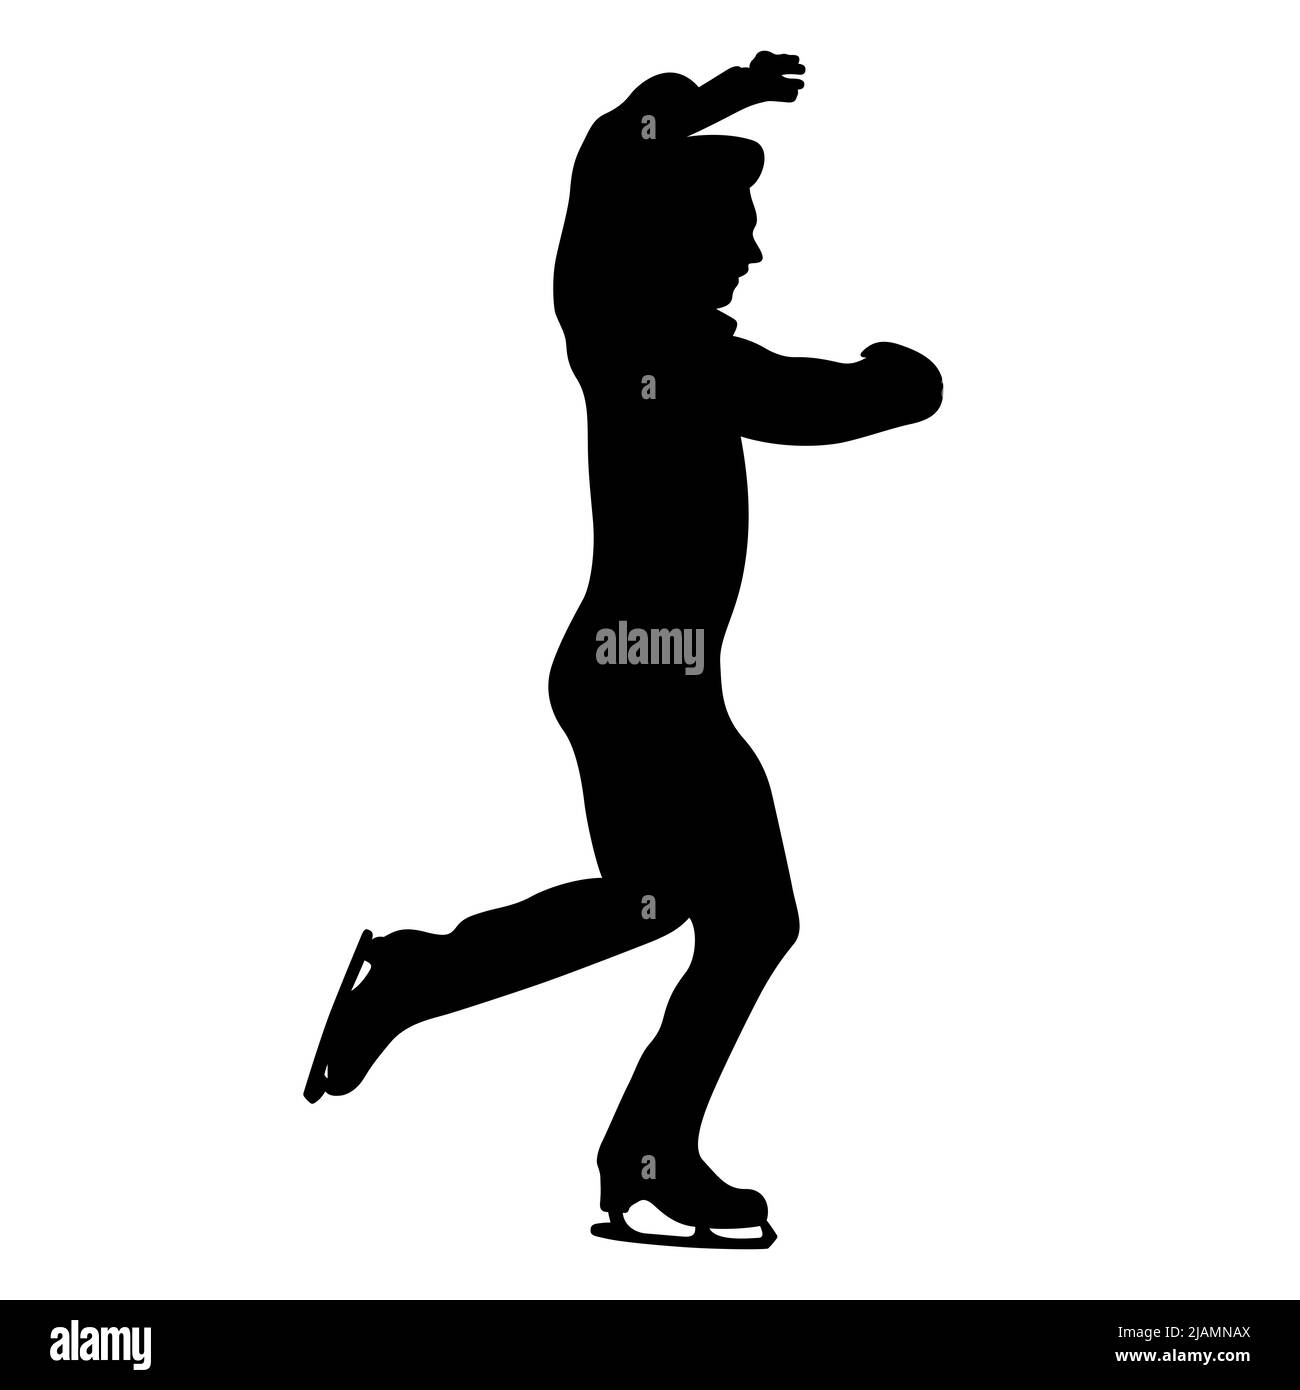 male figure skater black silhouette Stock Photo